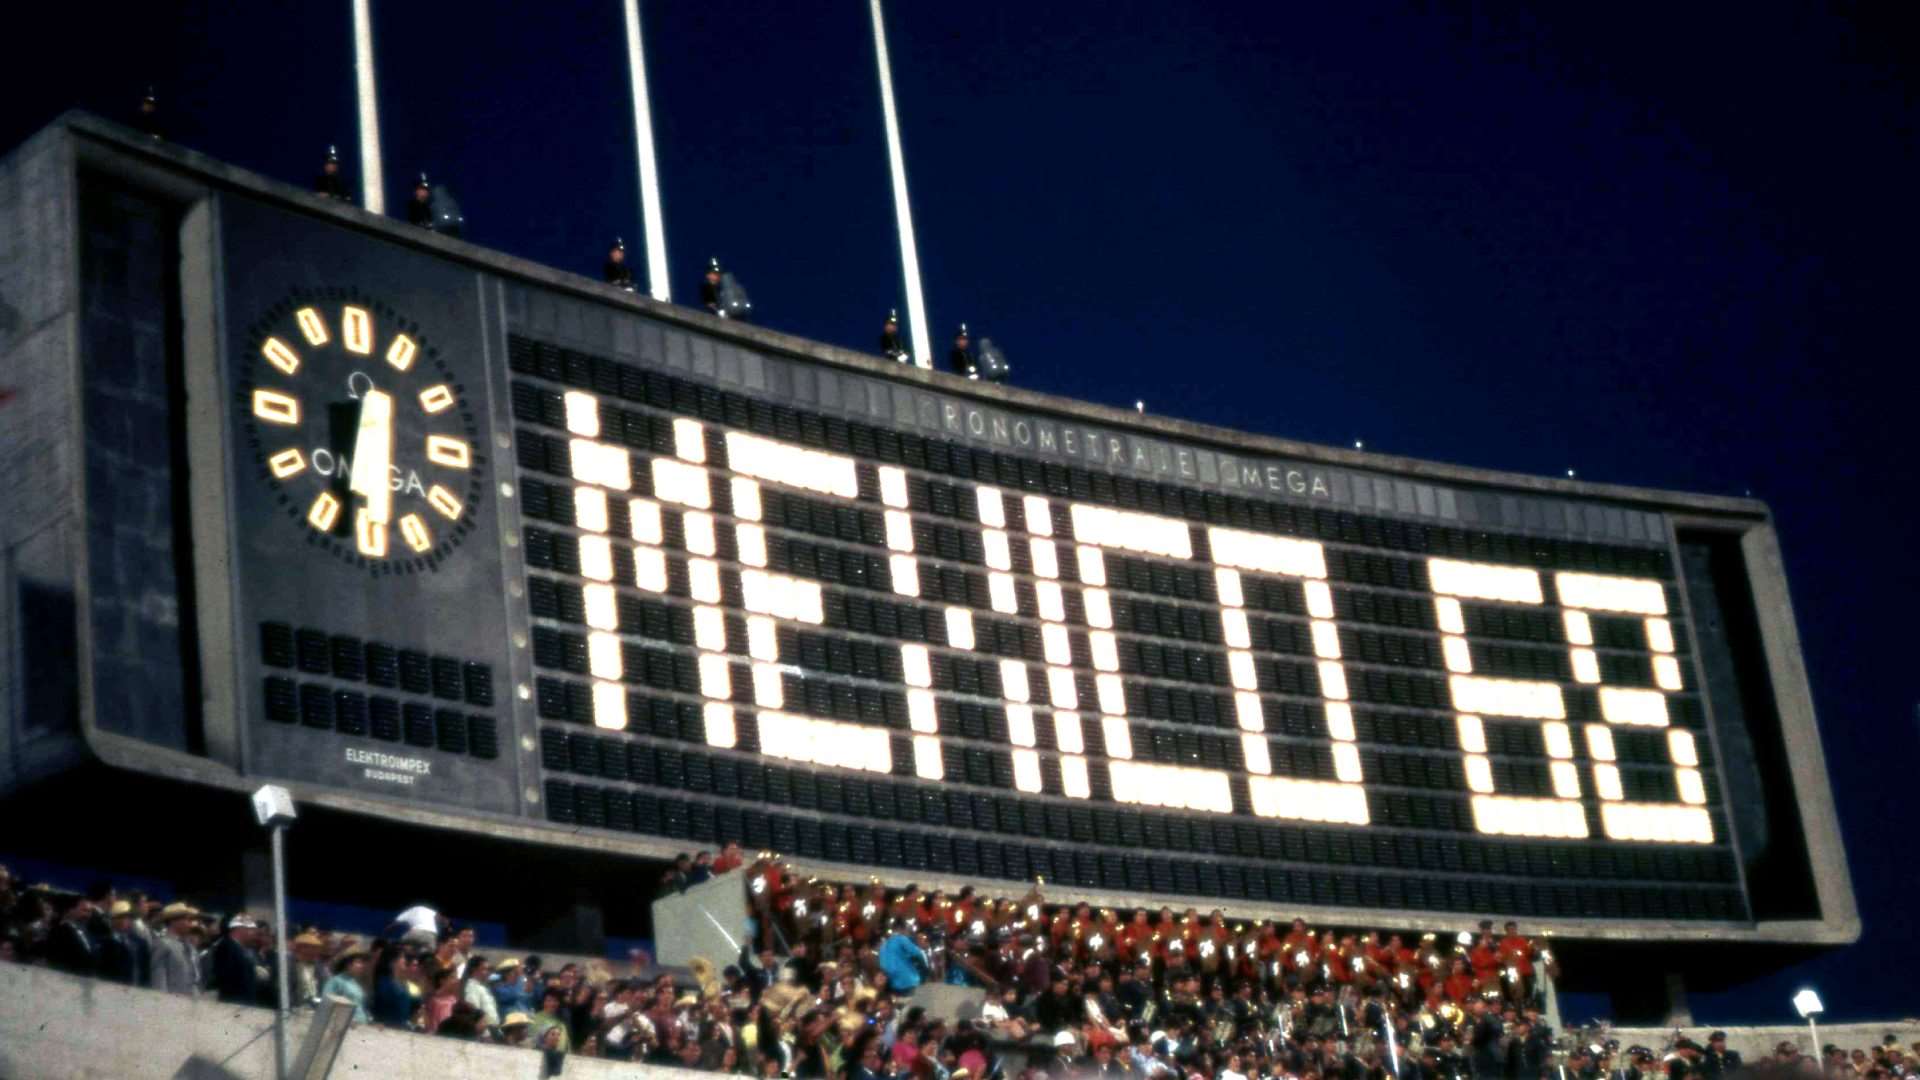 Mexico City 1968 Olympic Games at the Estadio Olímpico Universitario